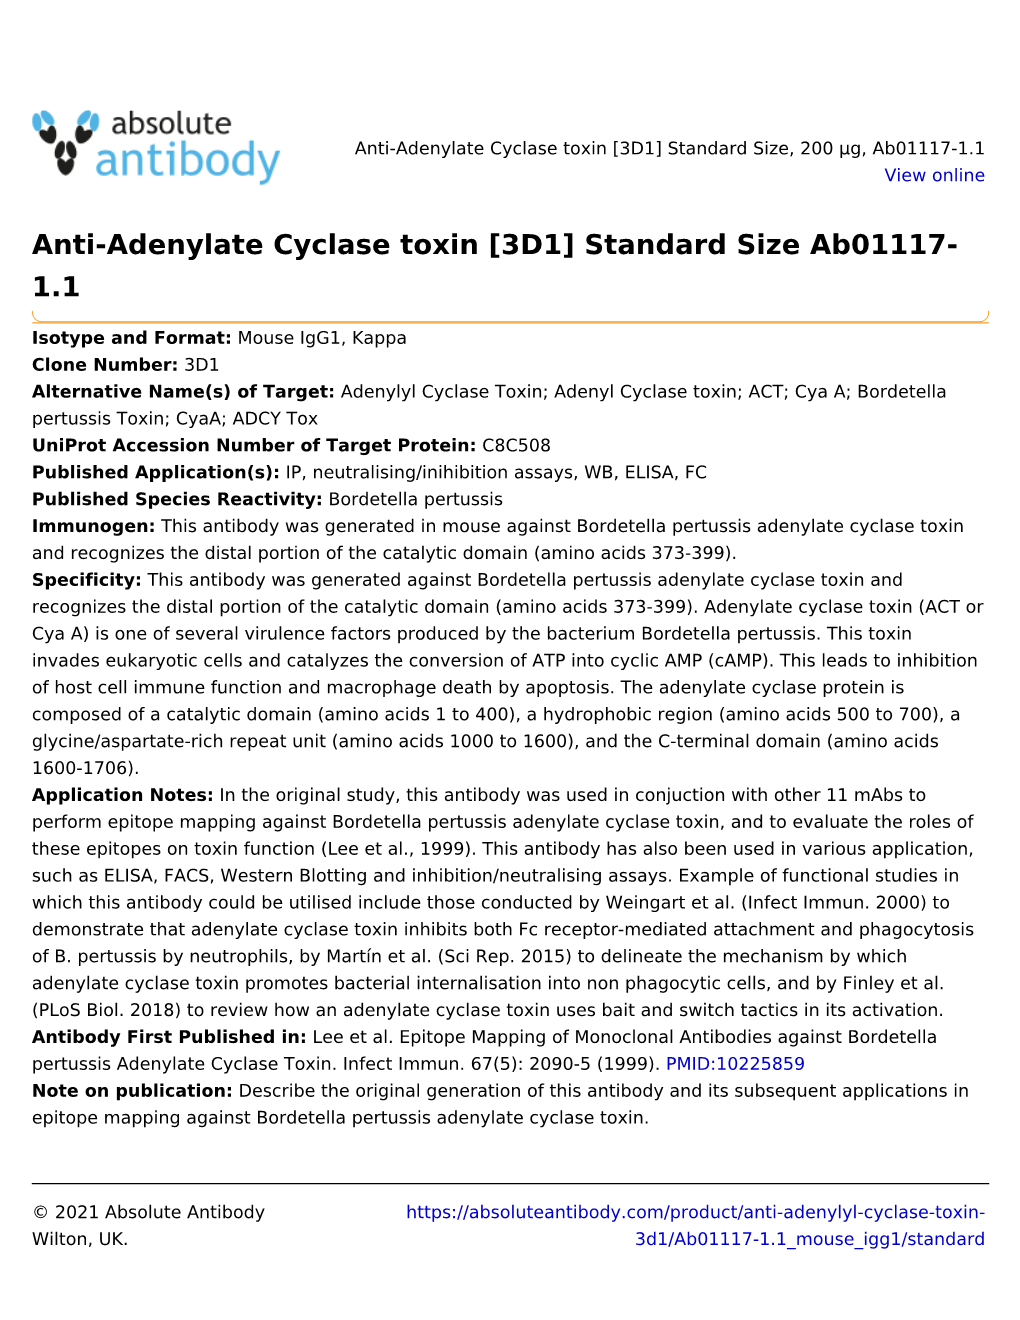 Anti-Adenylate Cyclase Toxin [3D1] Standard Size Ab01117- 1.1